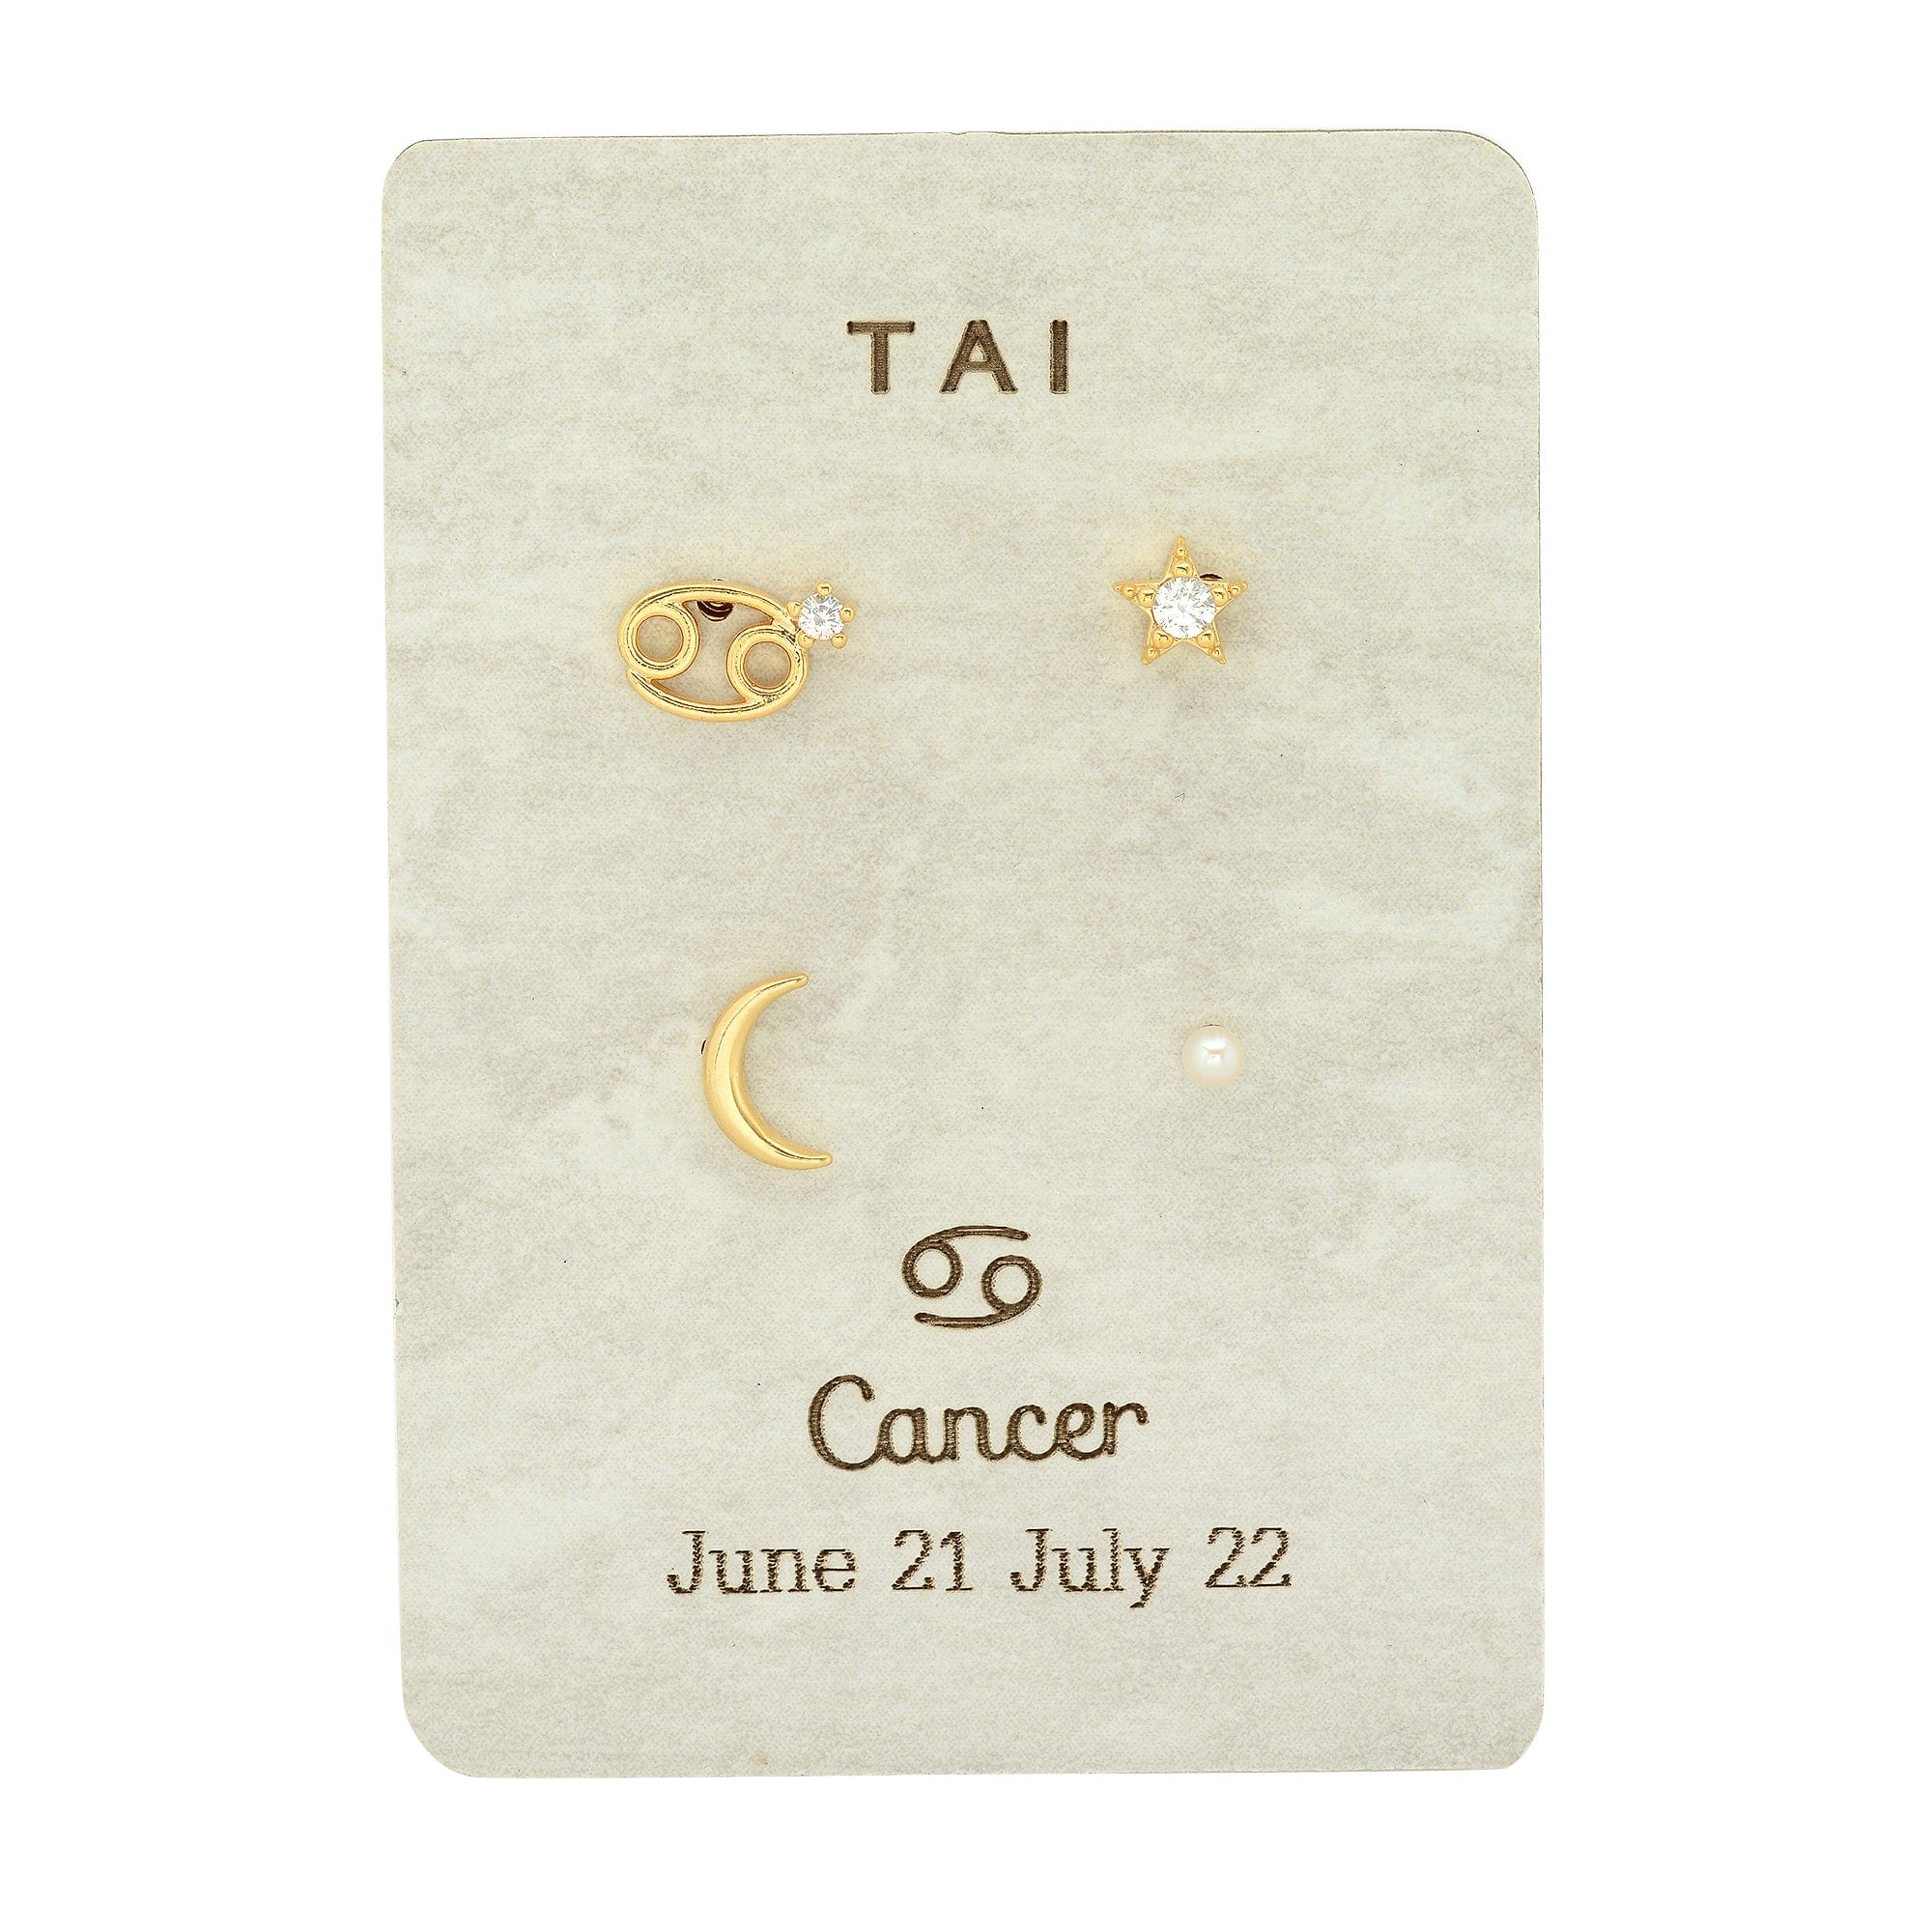 TAI JEWELRY Earrings Cancer Zodiac Celestial Stud Pack